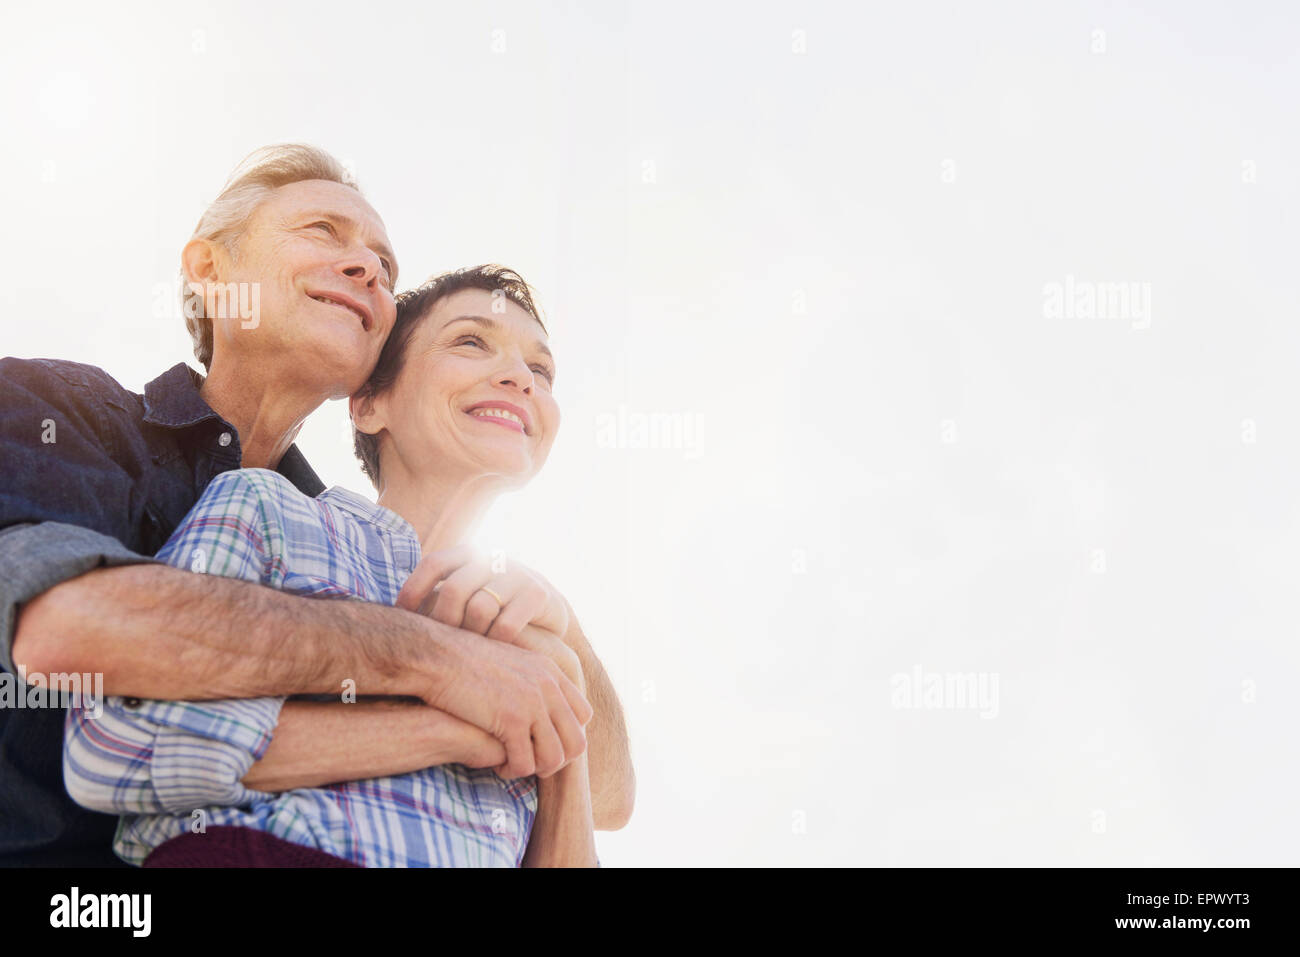 Smiling senior couple embracing in sunlight Stock Photo